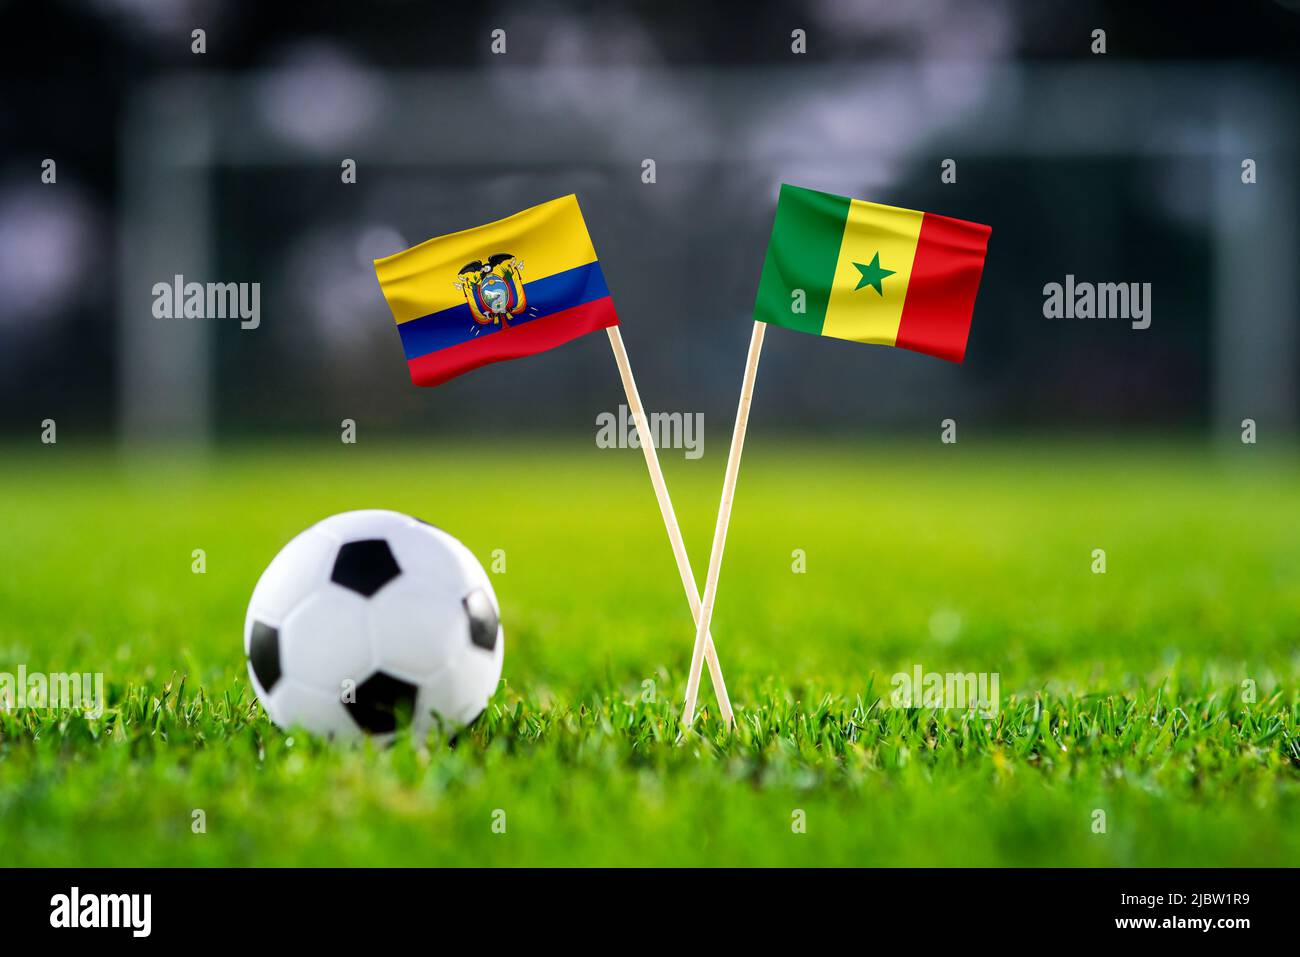 Ecuador vs. Senegal, Khalifa Stadium, Football match wallpaper, Handmade national flags and soccer ball on green grass. Football stadium in background Stock Photo